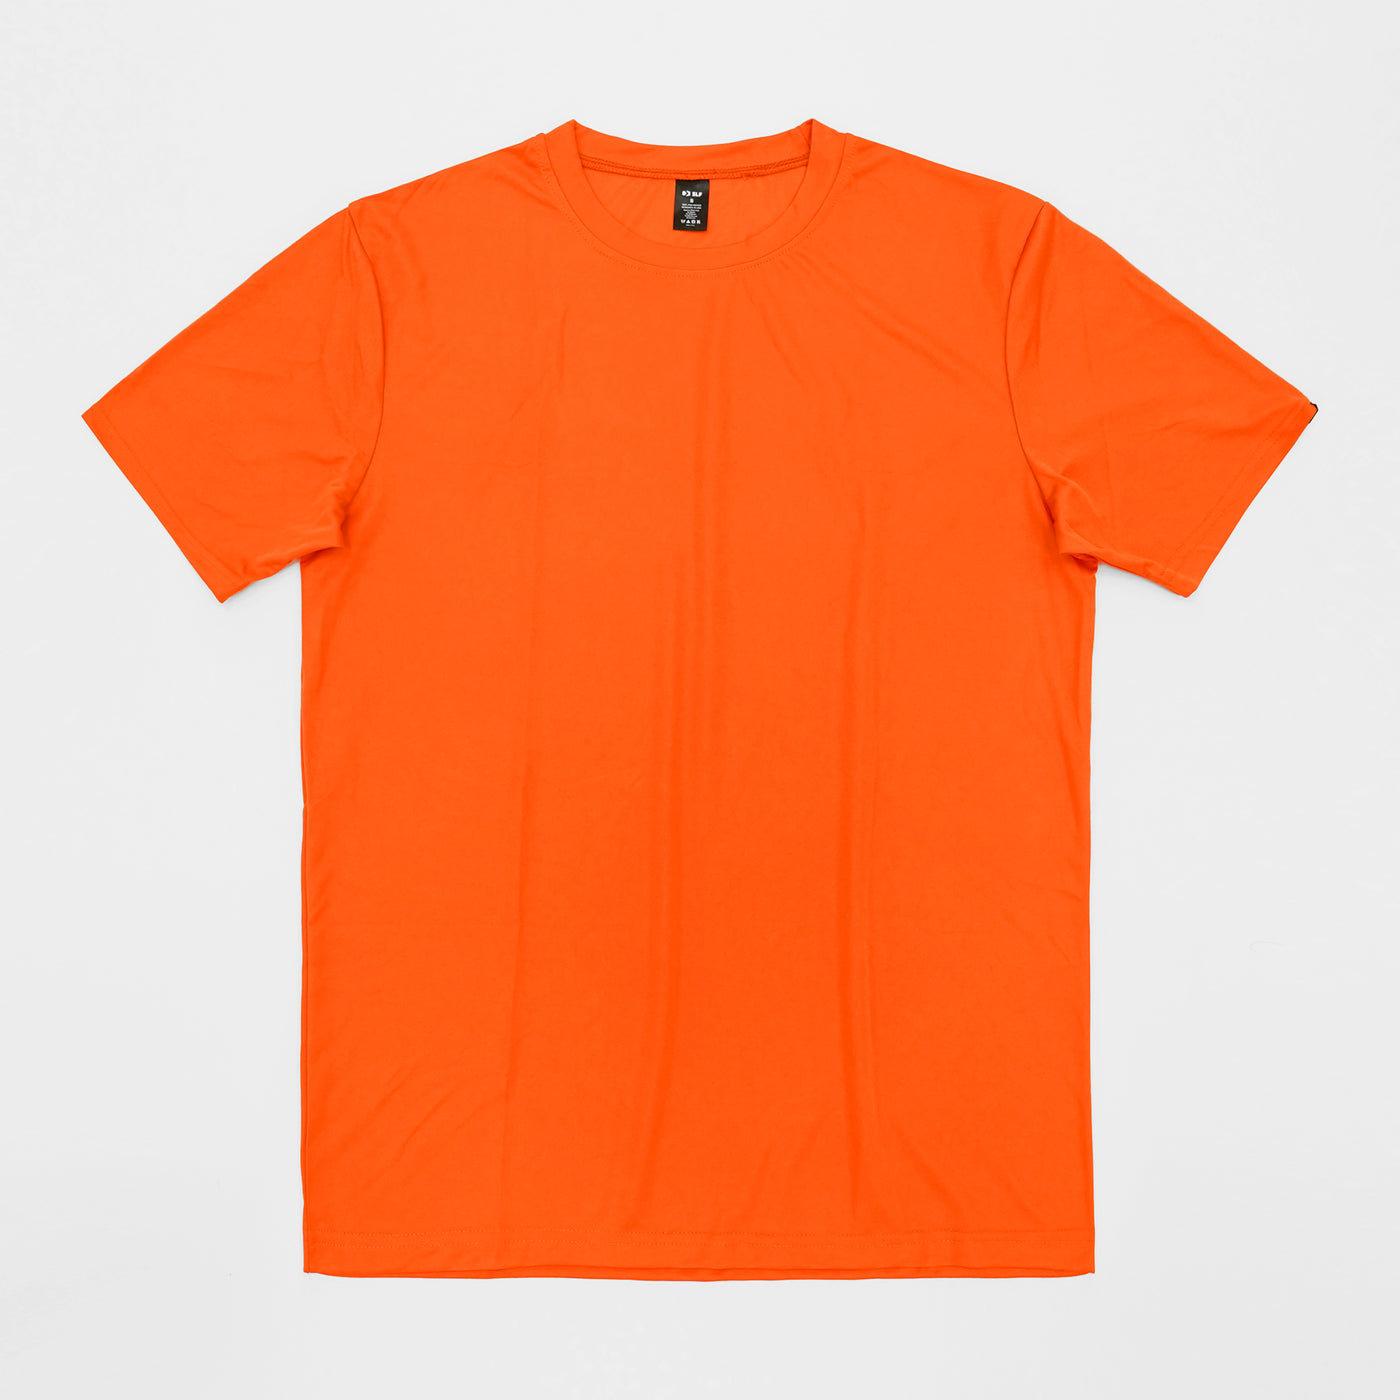 Hue Orange Quick Dry Shirt - Big